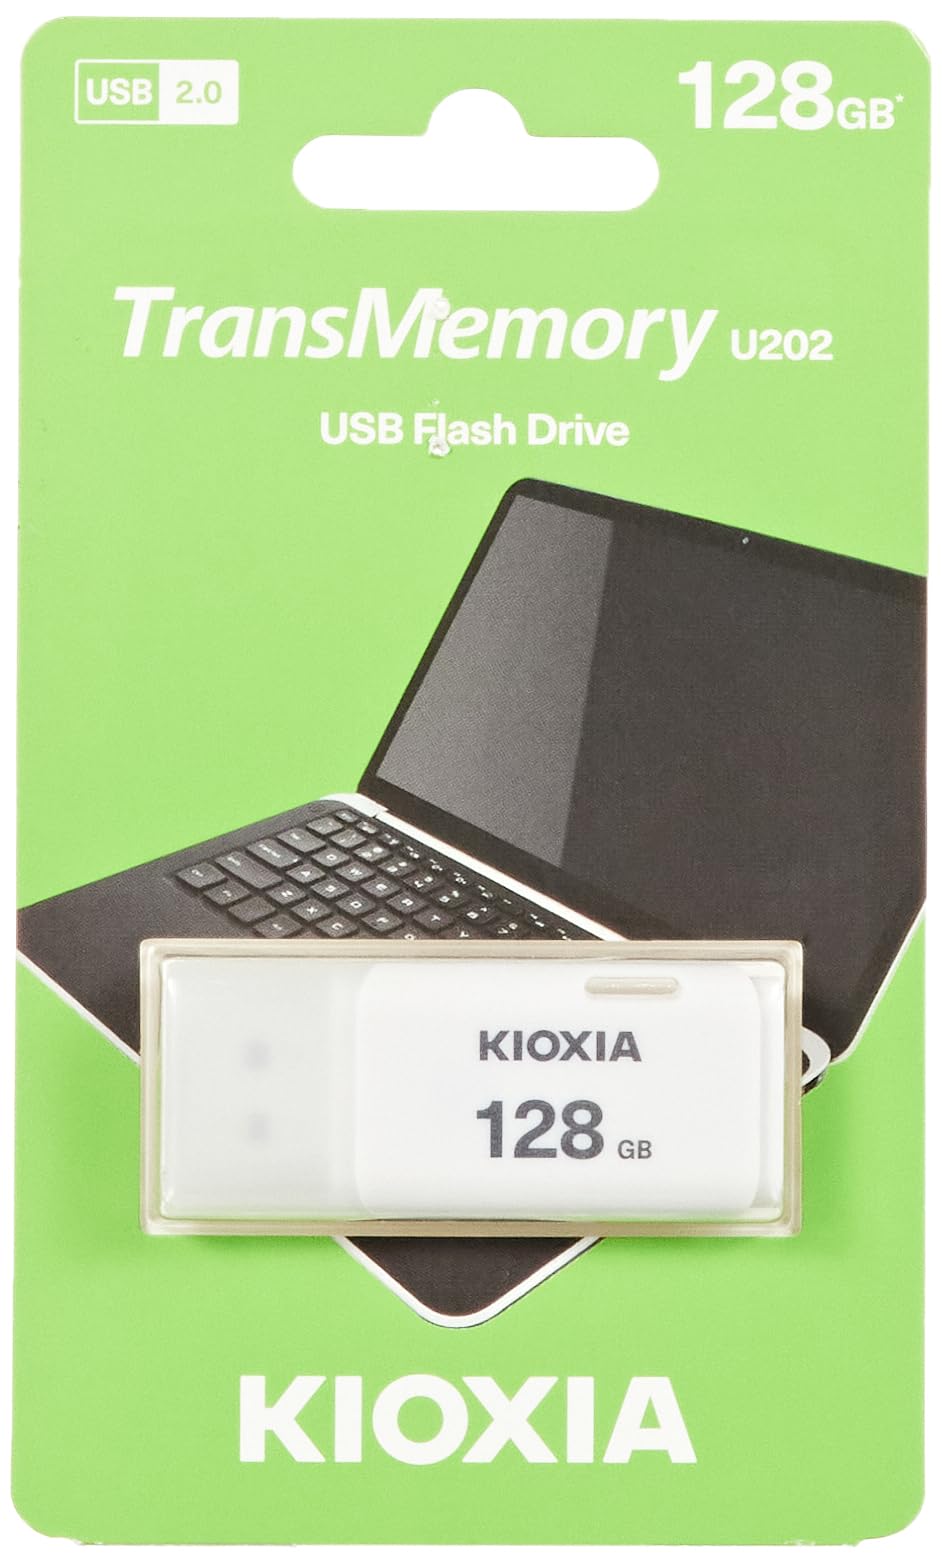 TransMemory U202 LU202W128GG4 （128GB ホワイト 海外パッケージ品）の商品画像